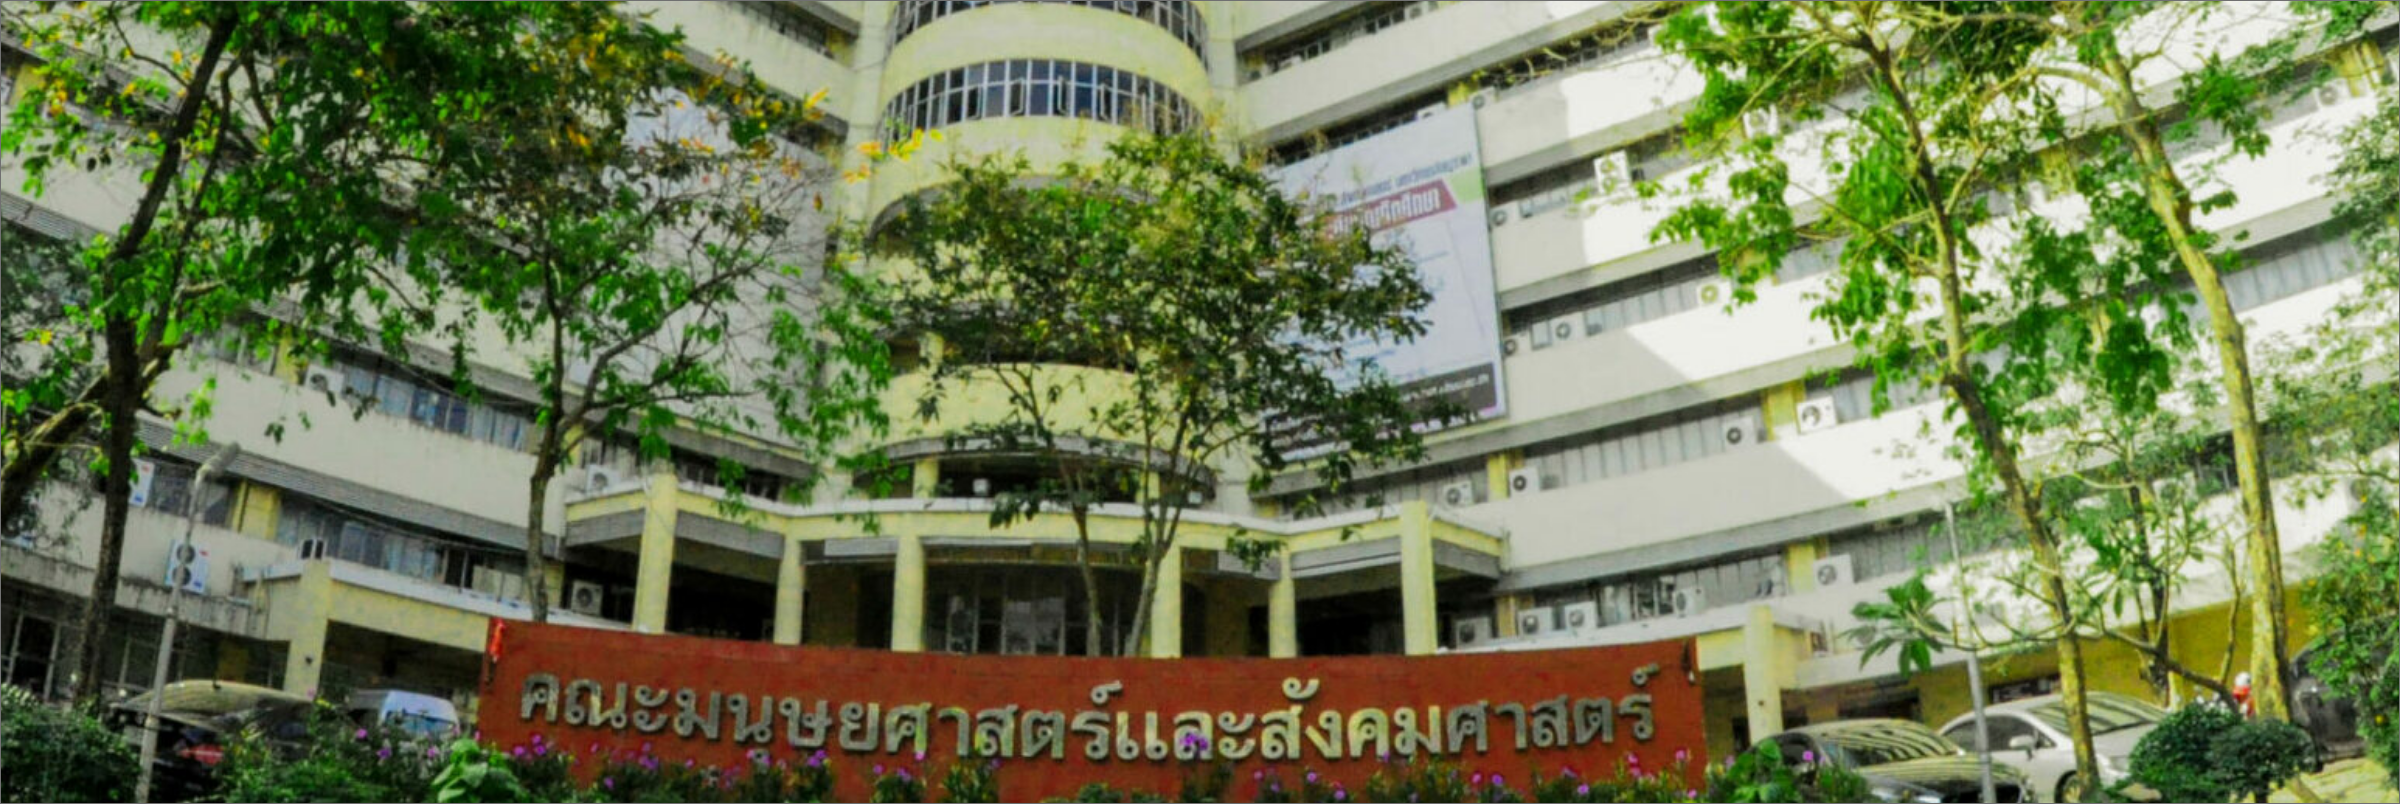 Burapha University(Thailand)